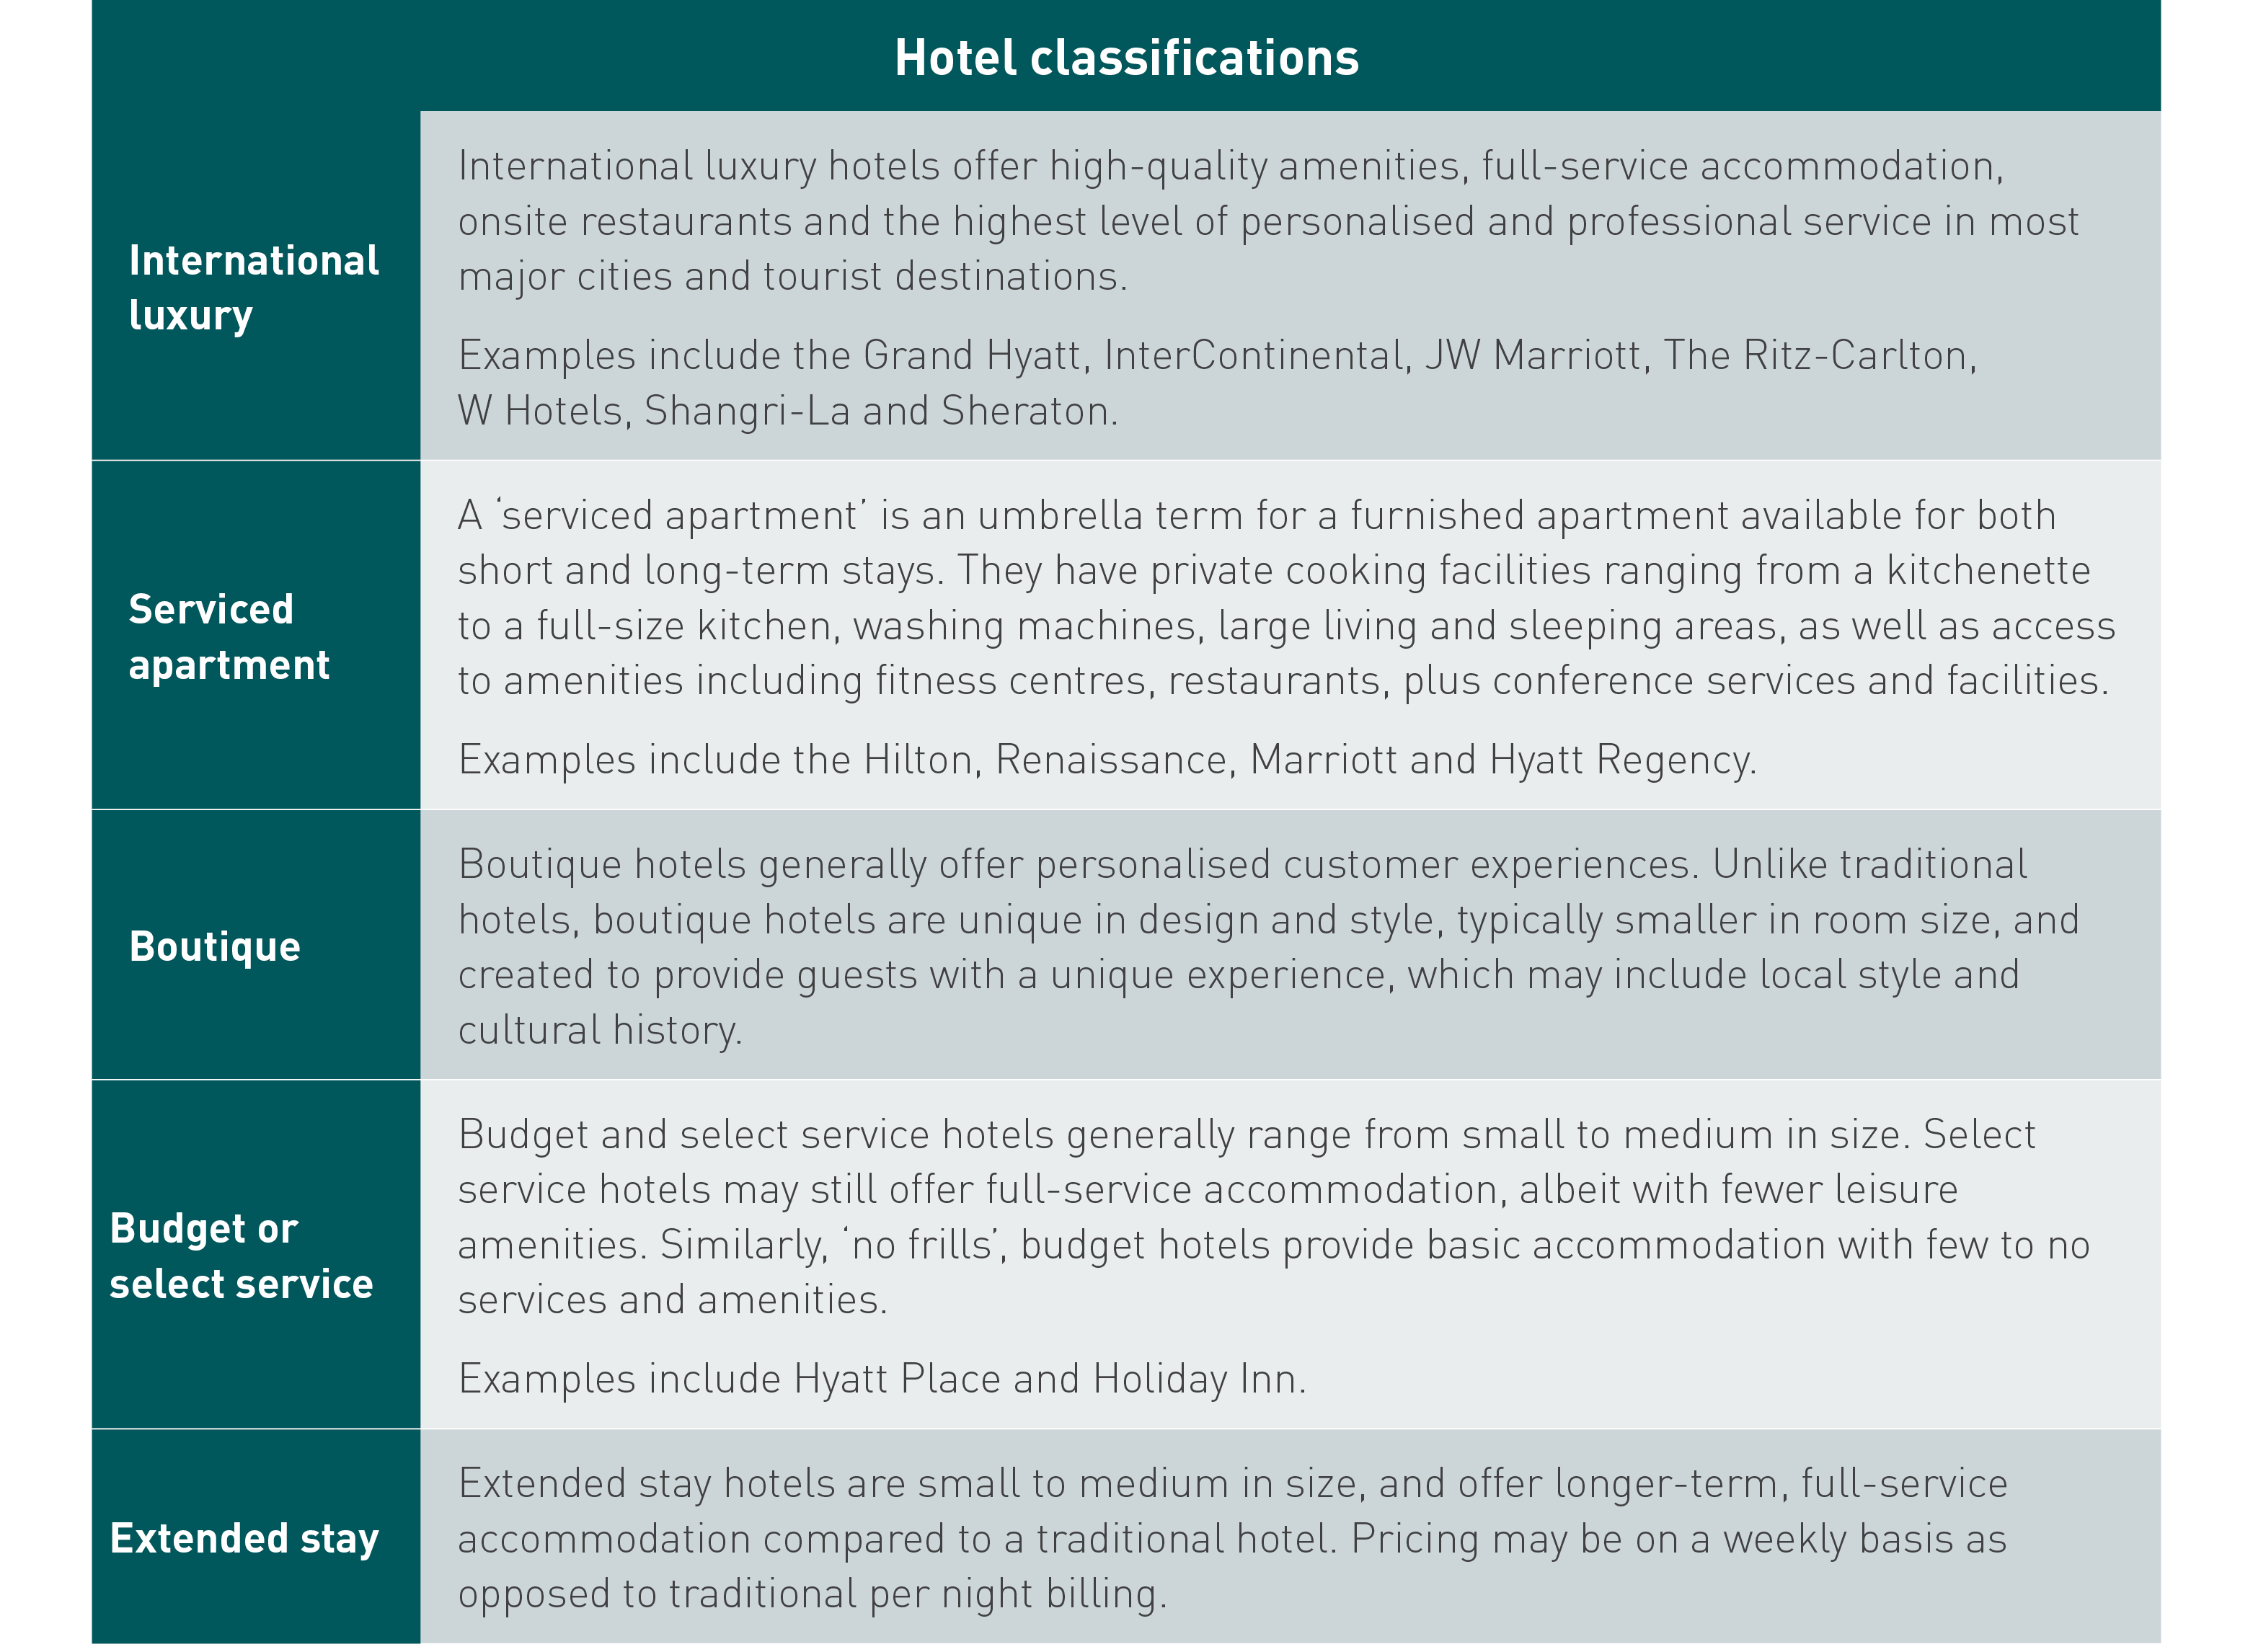 Hotel classifications spreadsheet